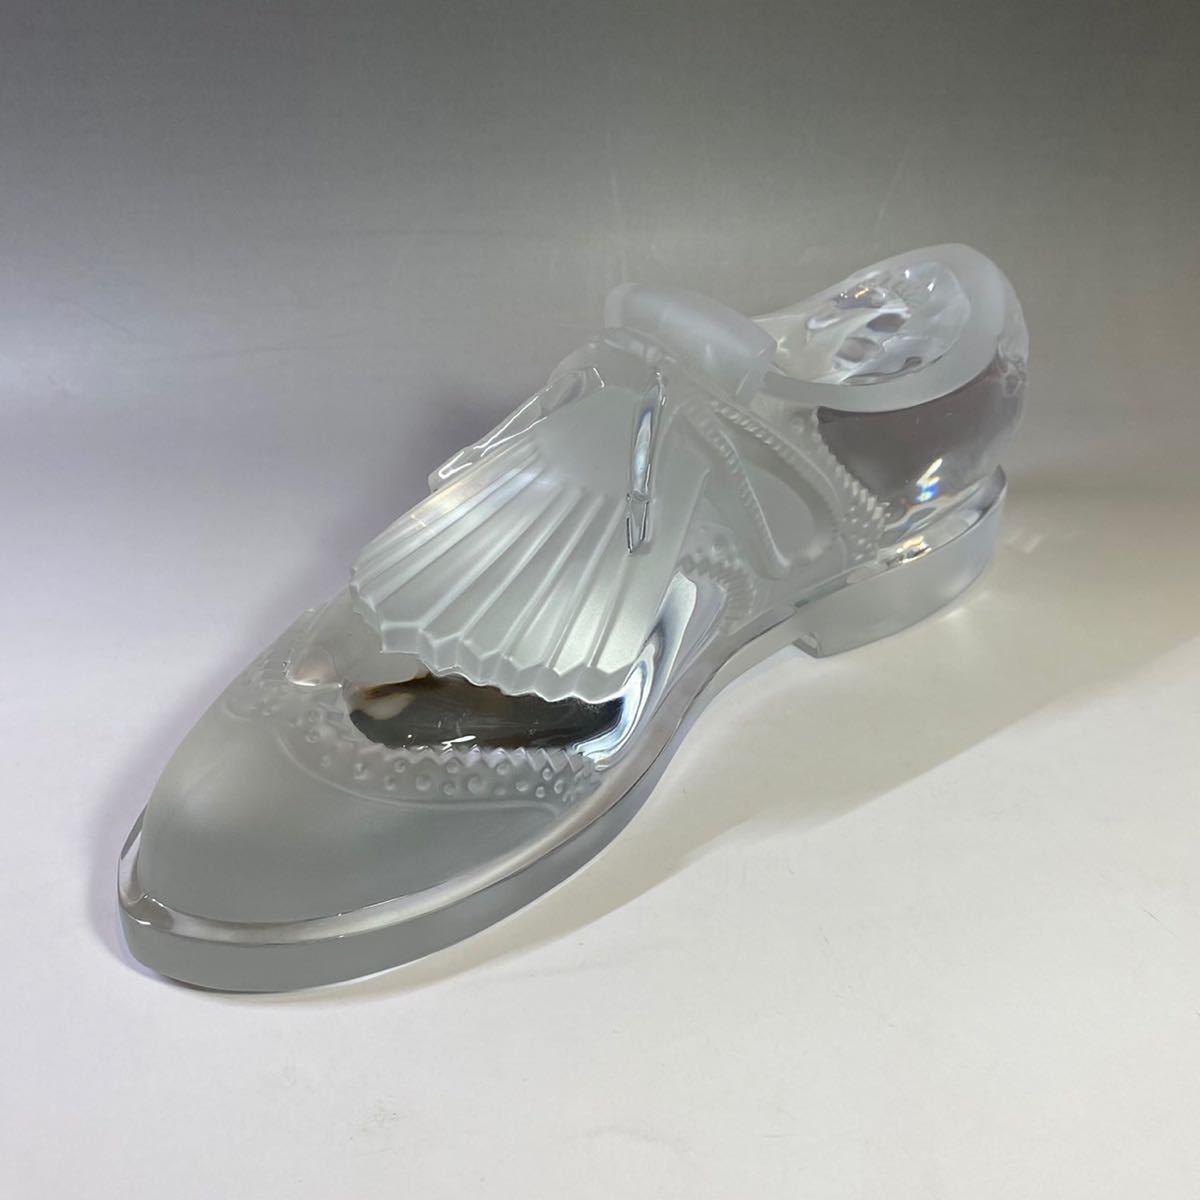 ROYALES DE CHAMPAGNE ロイヤルドシャンパーニュ ガラス オブジェ 靴 紳士 置物 小物入れ 美術品 インテリア クリスタルガラス